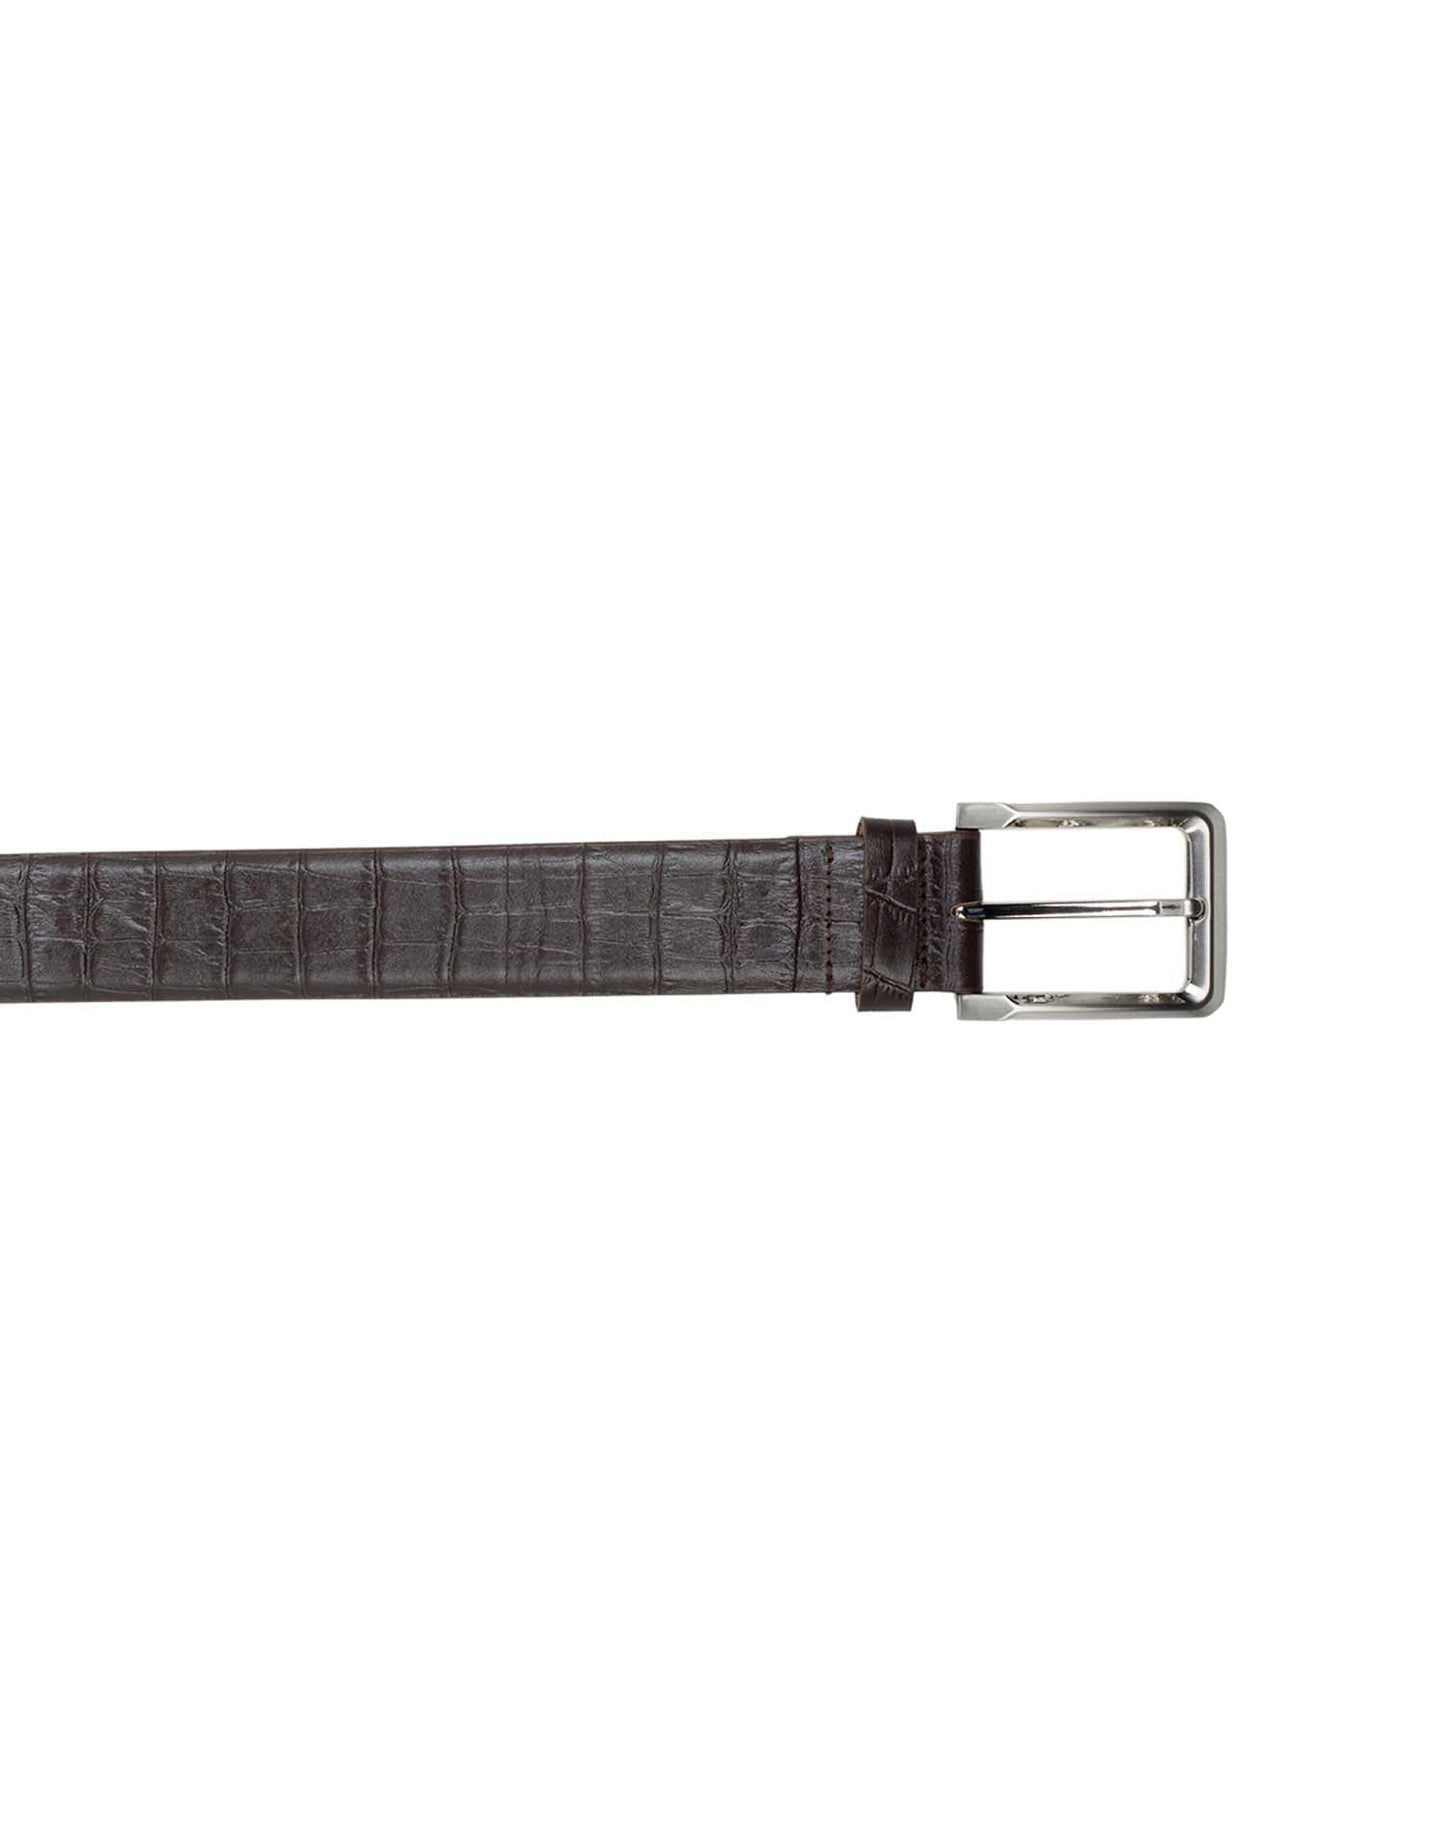 CLASSIC CROC Patterned Leather Belt ARB1012BR ARCADIO